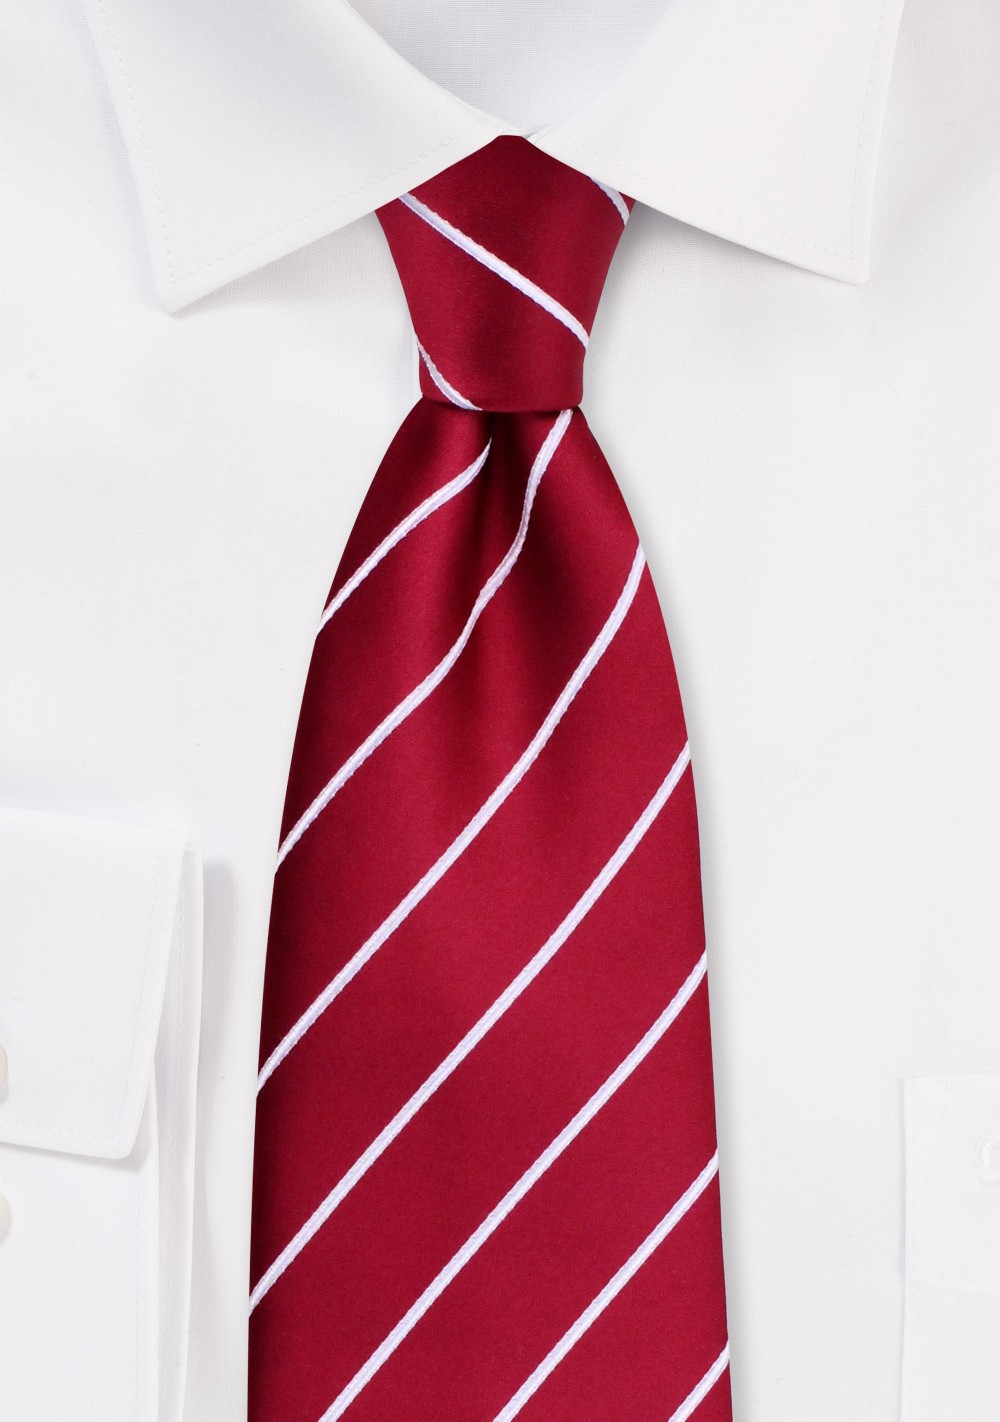 Striped Cherry Red Tie in XL Size